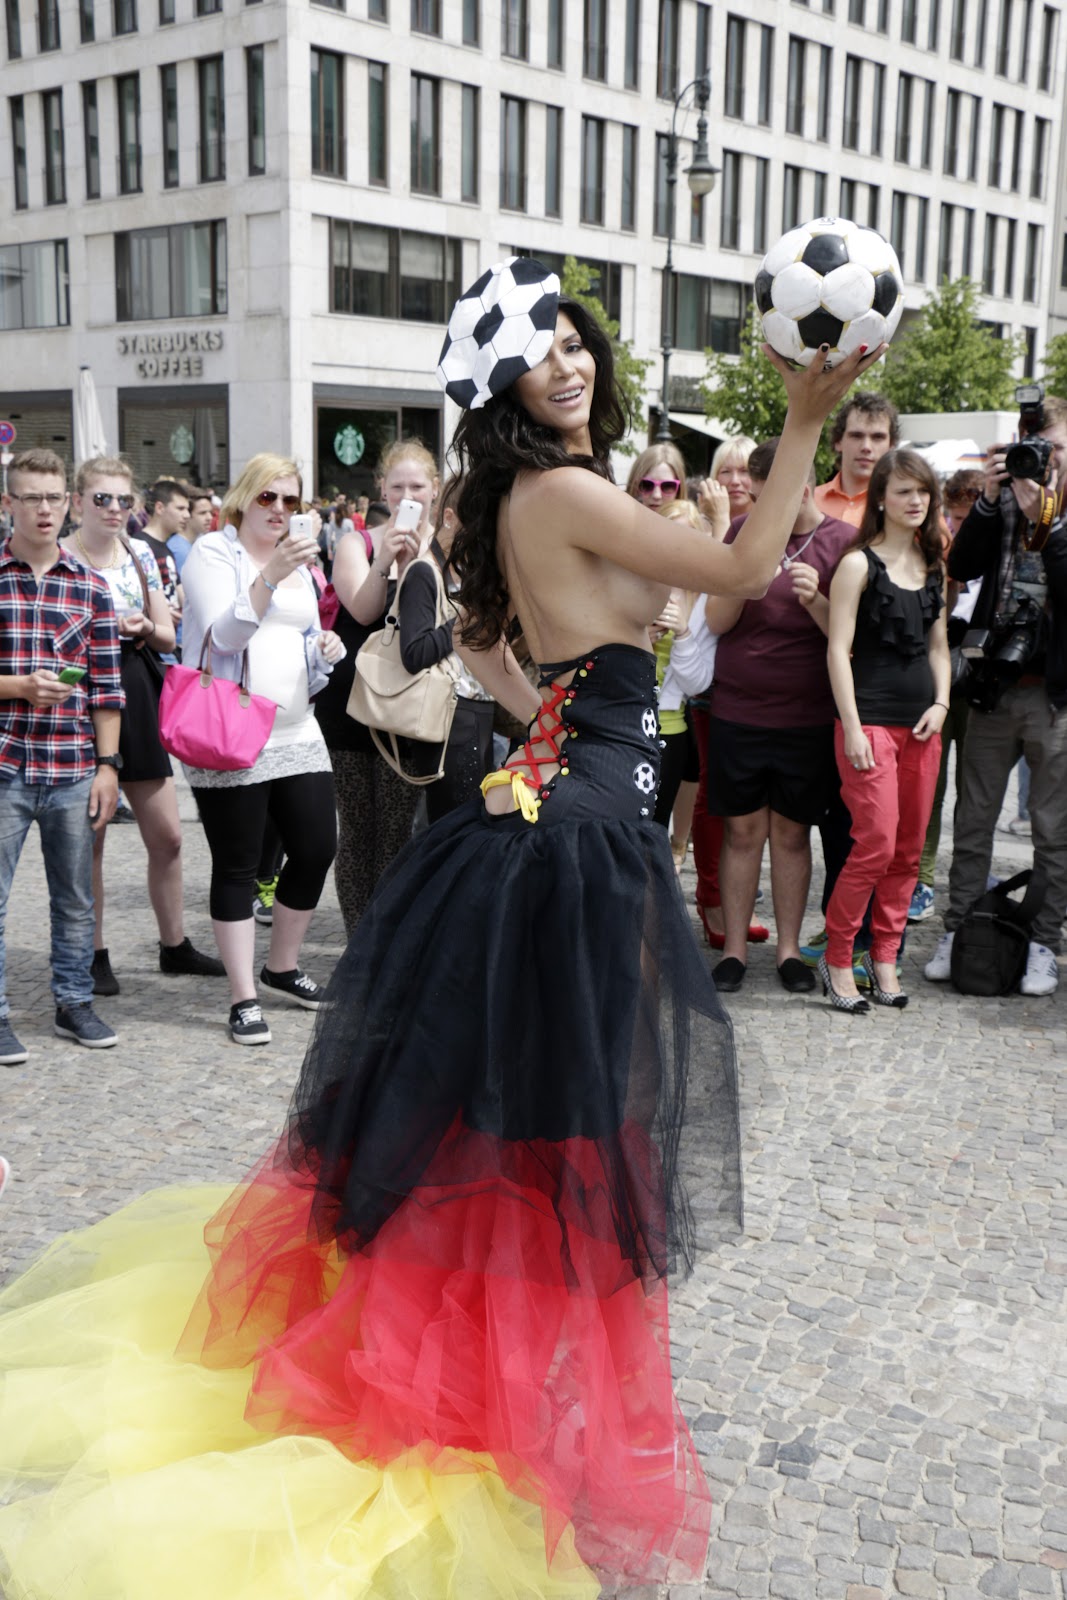 Micaela Schafer 2014 World Cup promo shoot at the Brandenburg Gate